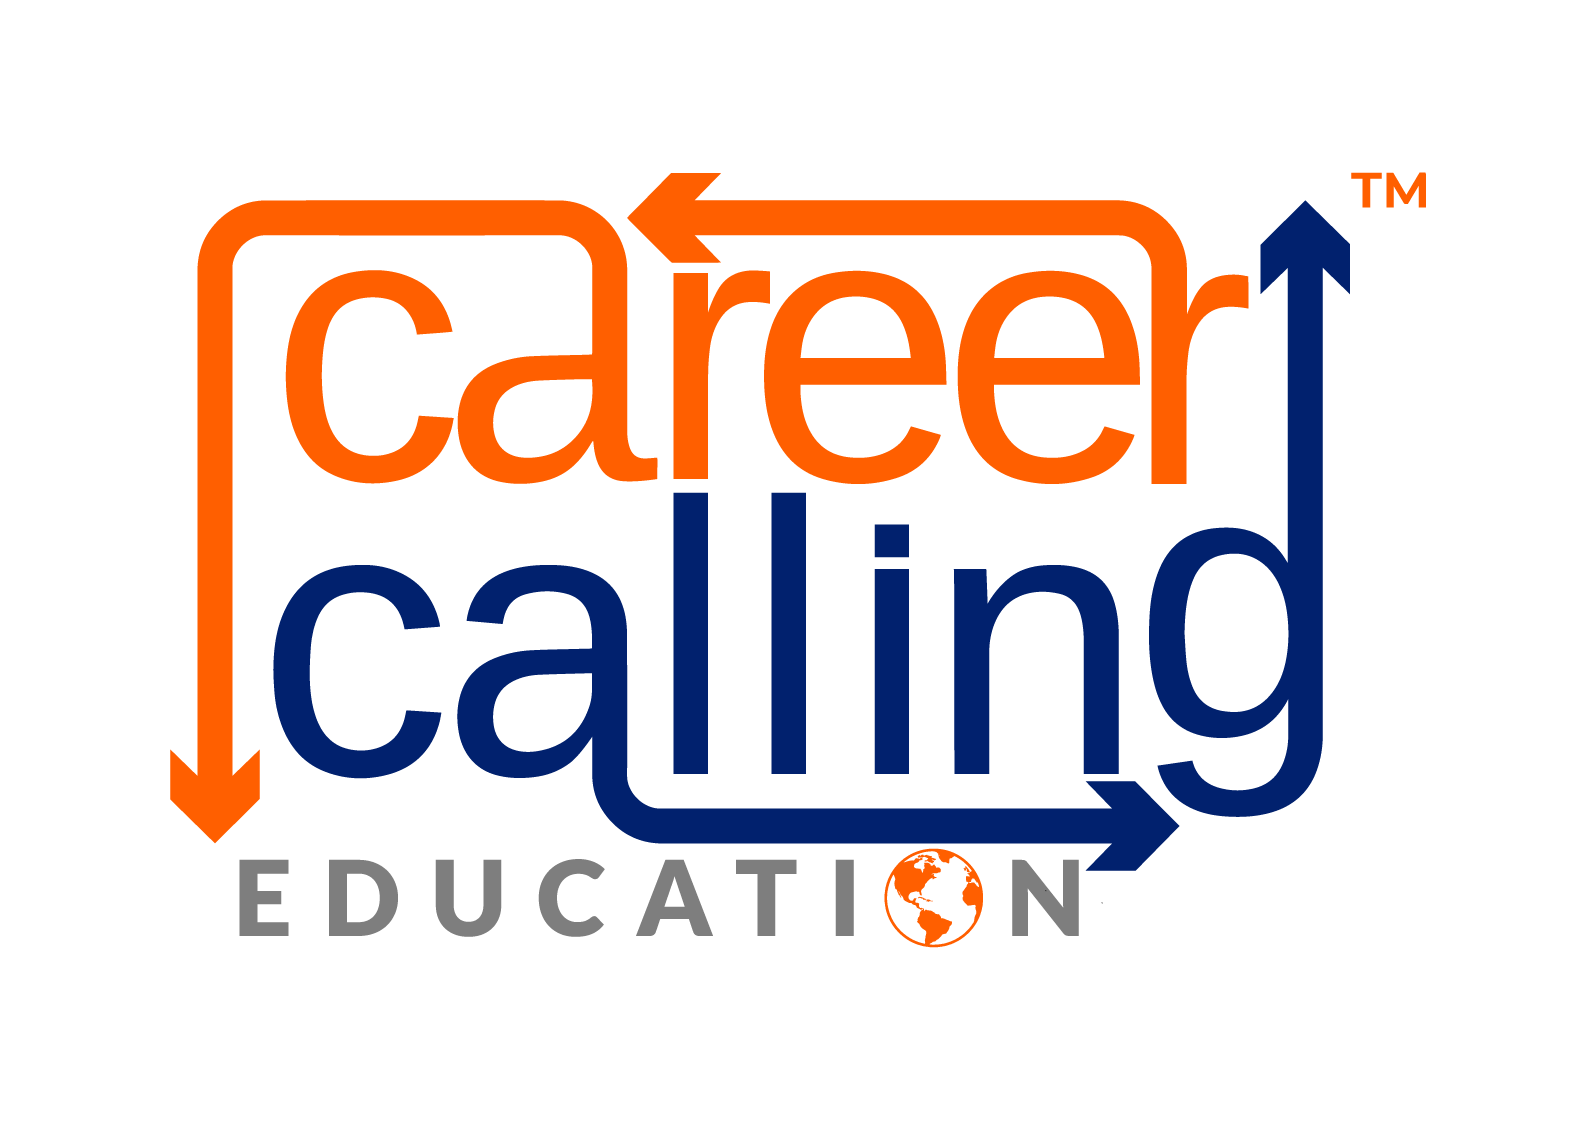 Career Calling Education